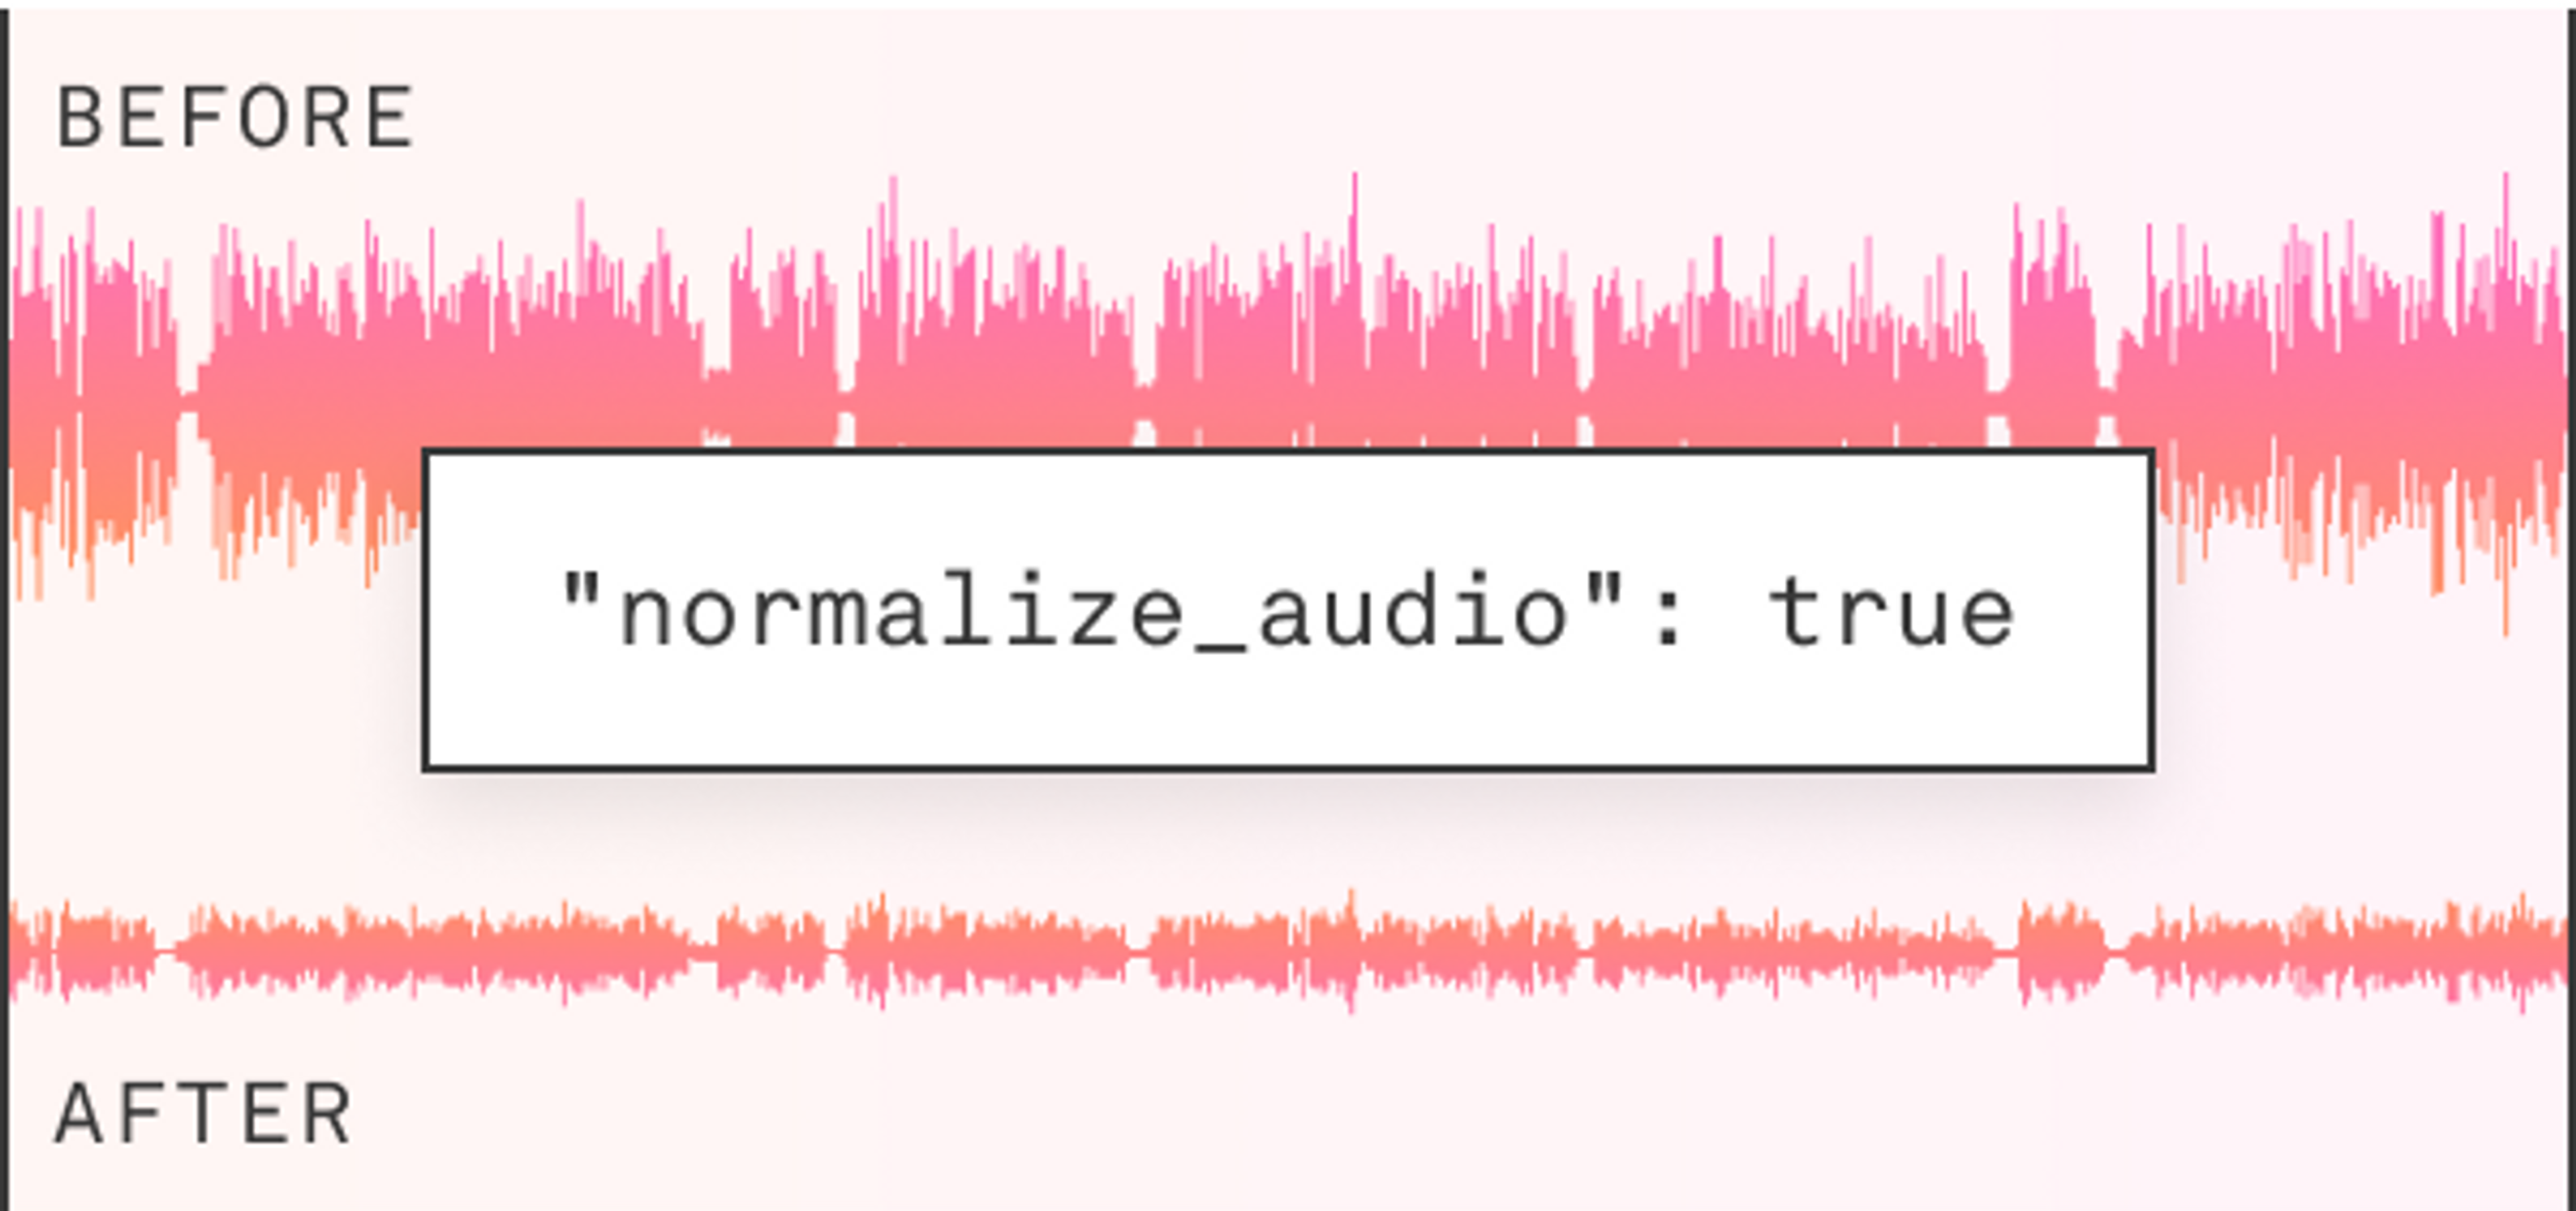 normalize_audio: true